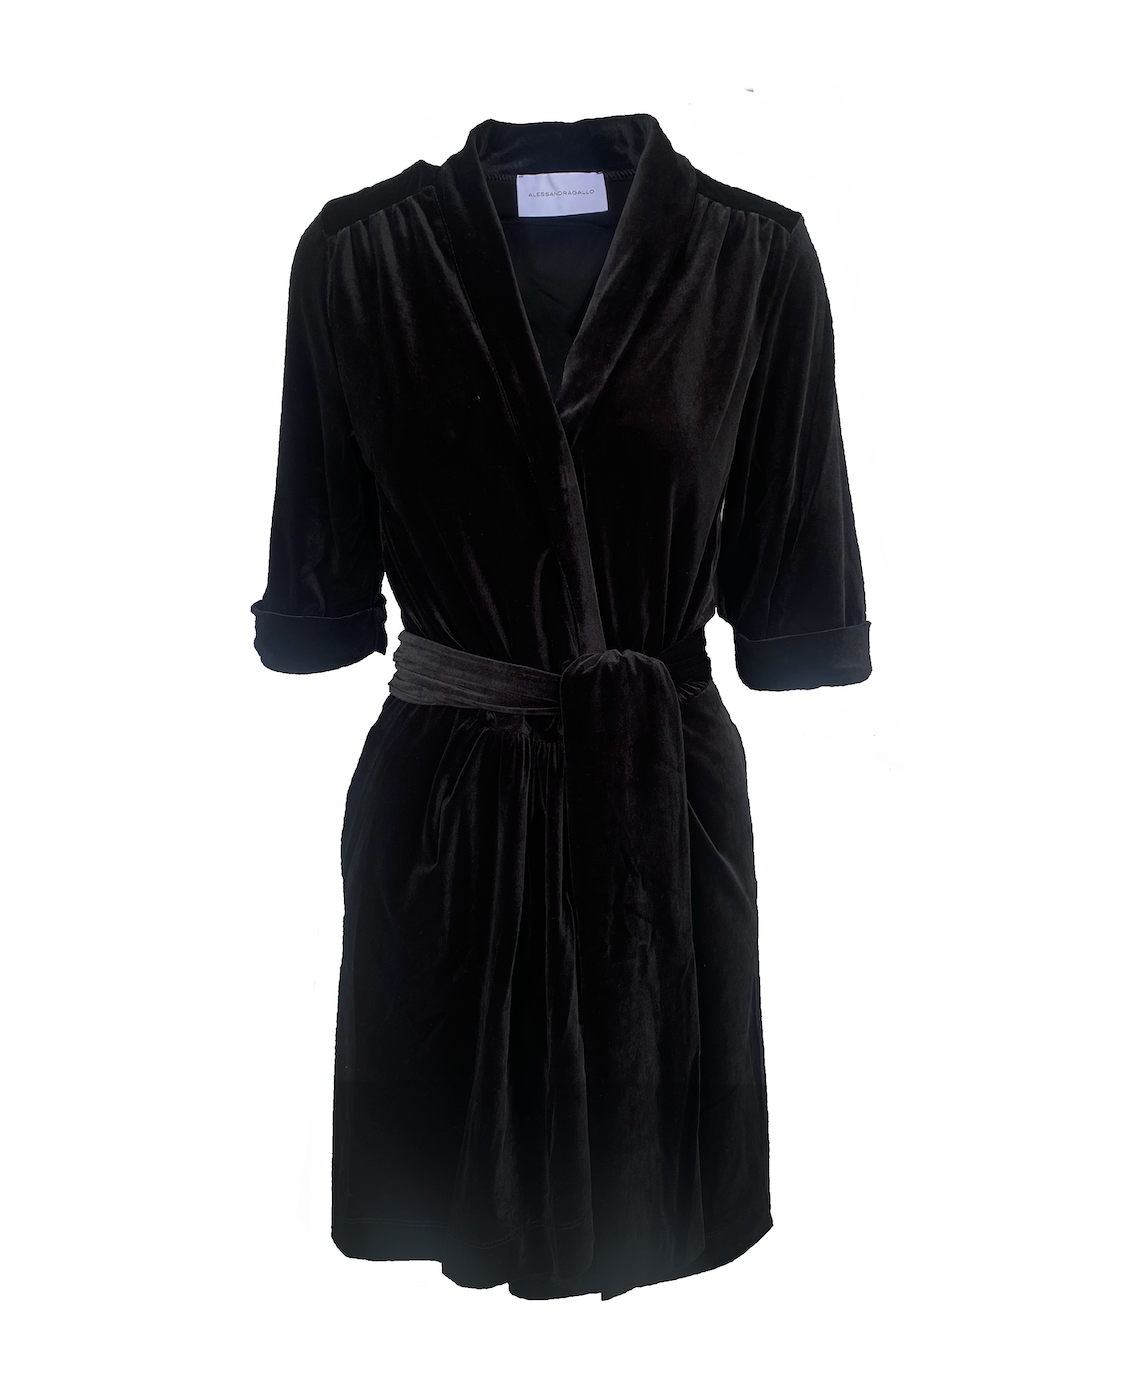 GINEVRA MINI - short dress in black chenille